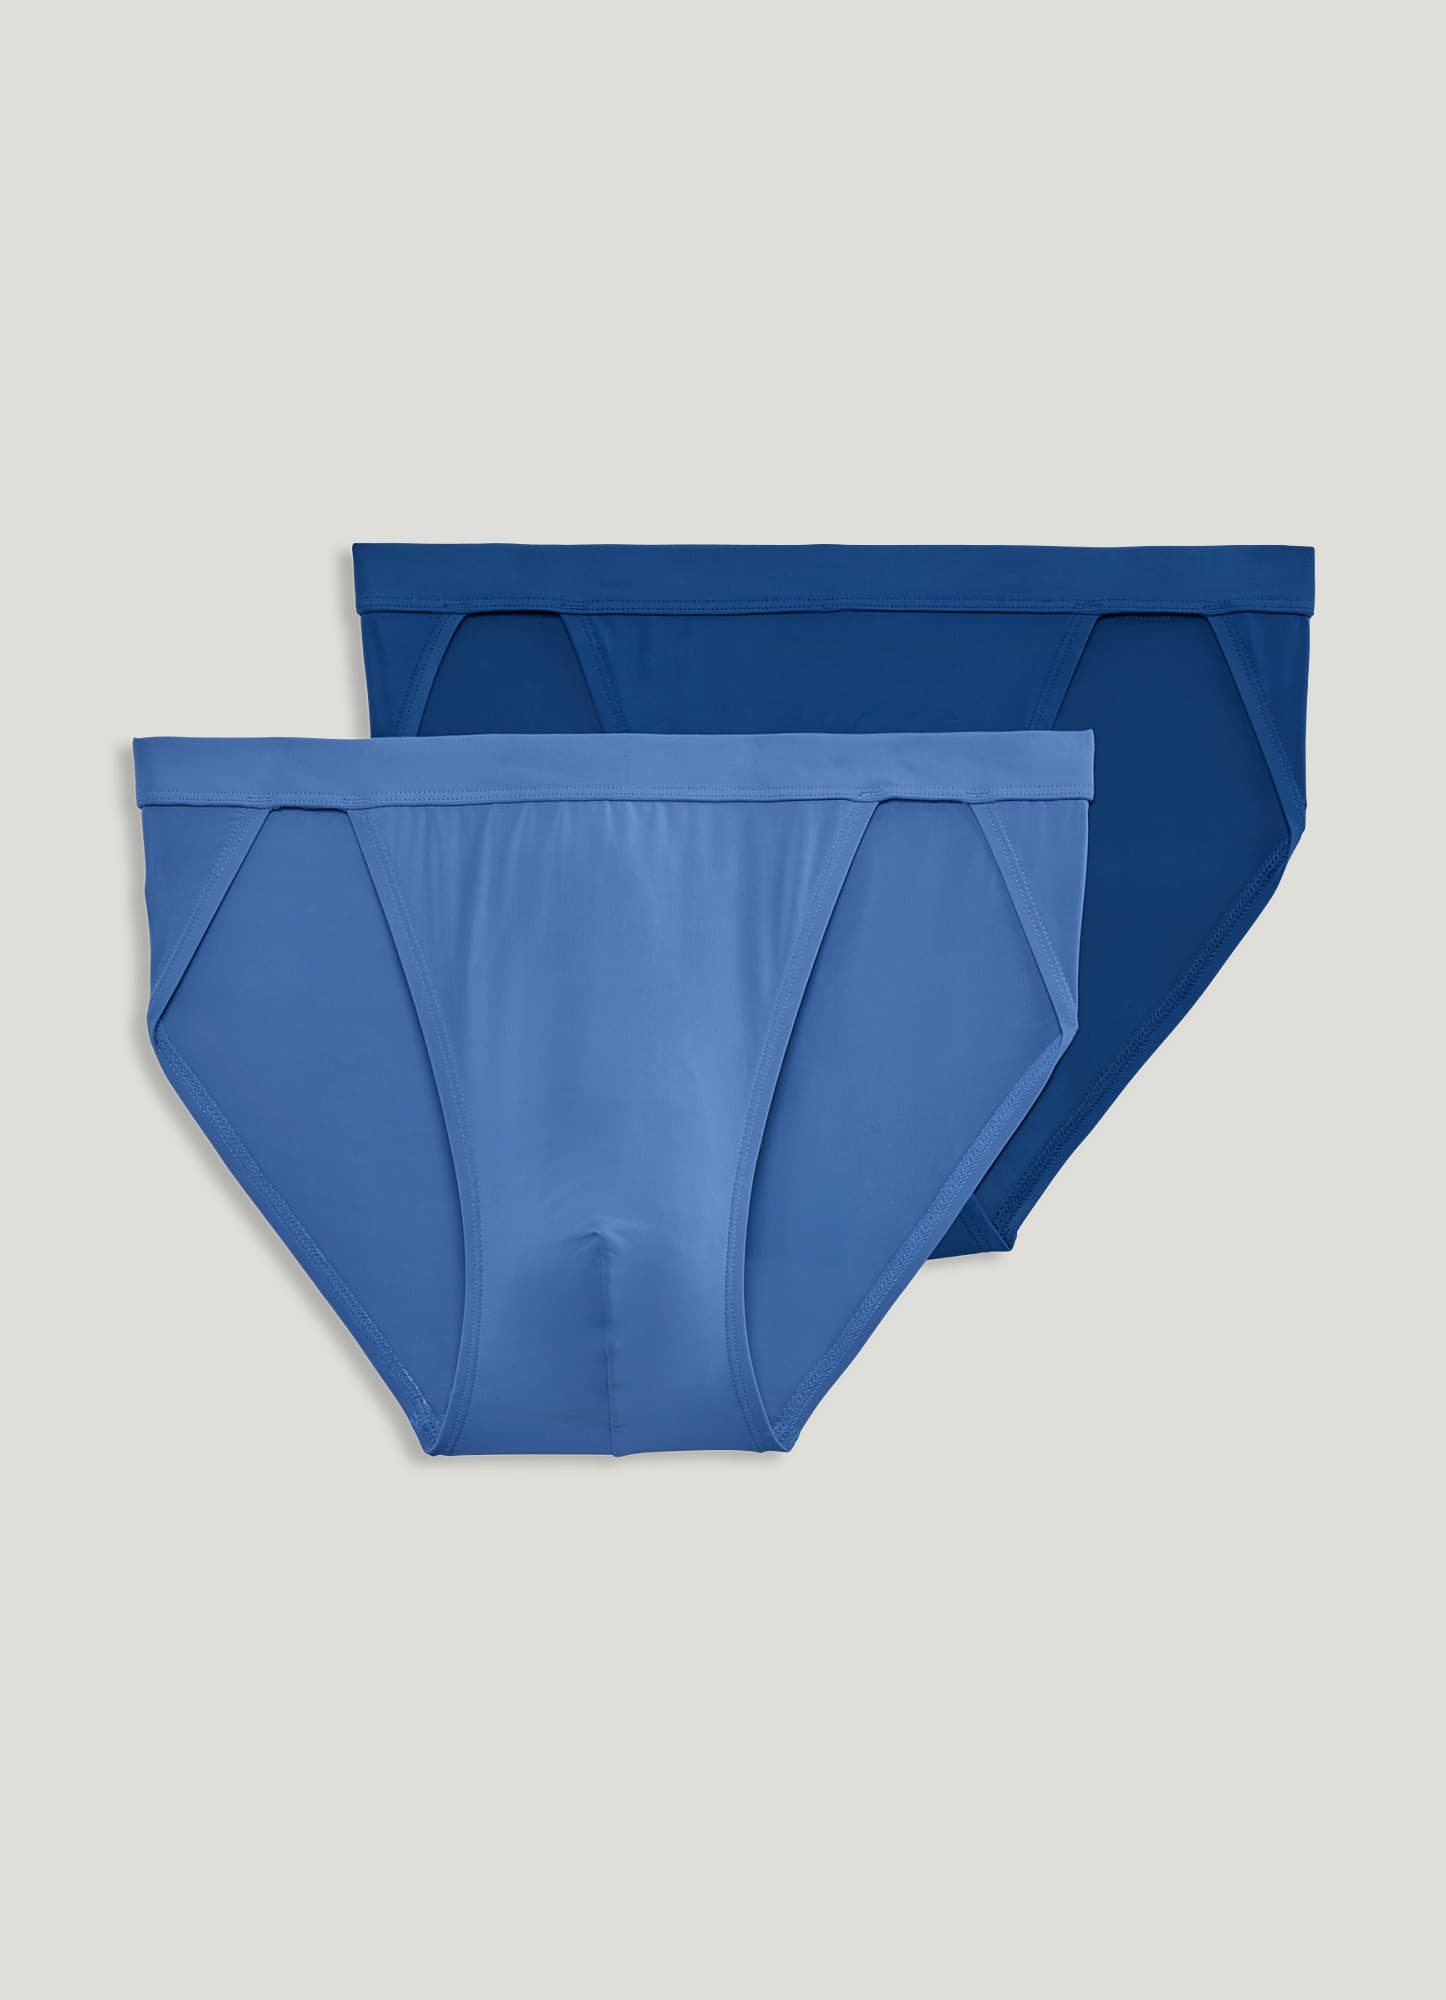 Jockey Men's Underwear Elance String Bikini - 2 Pack, Black, L,   price tracker / tracking,  price history charts,  price  watches,  price drop alerts